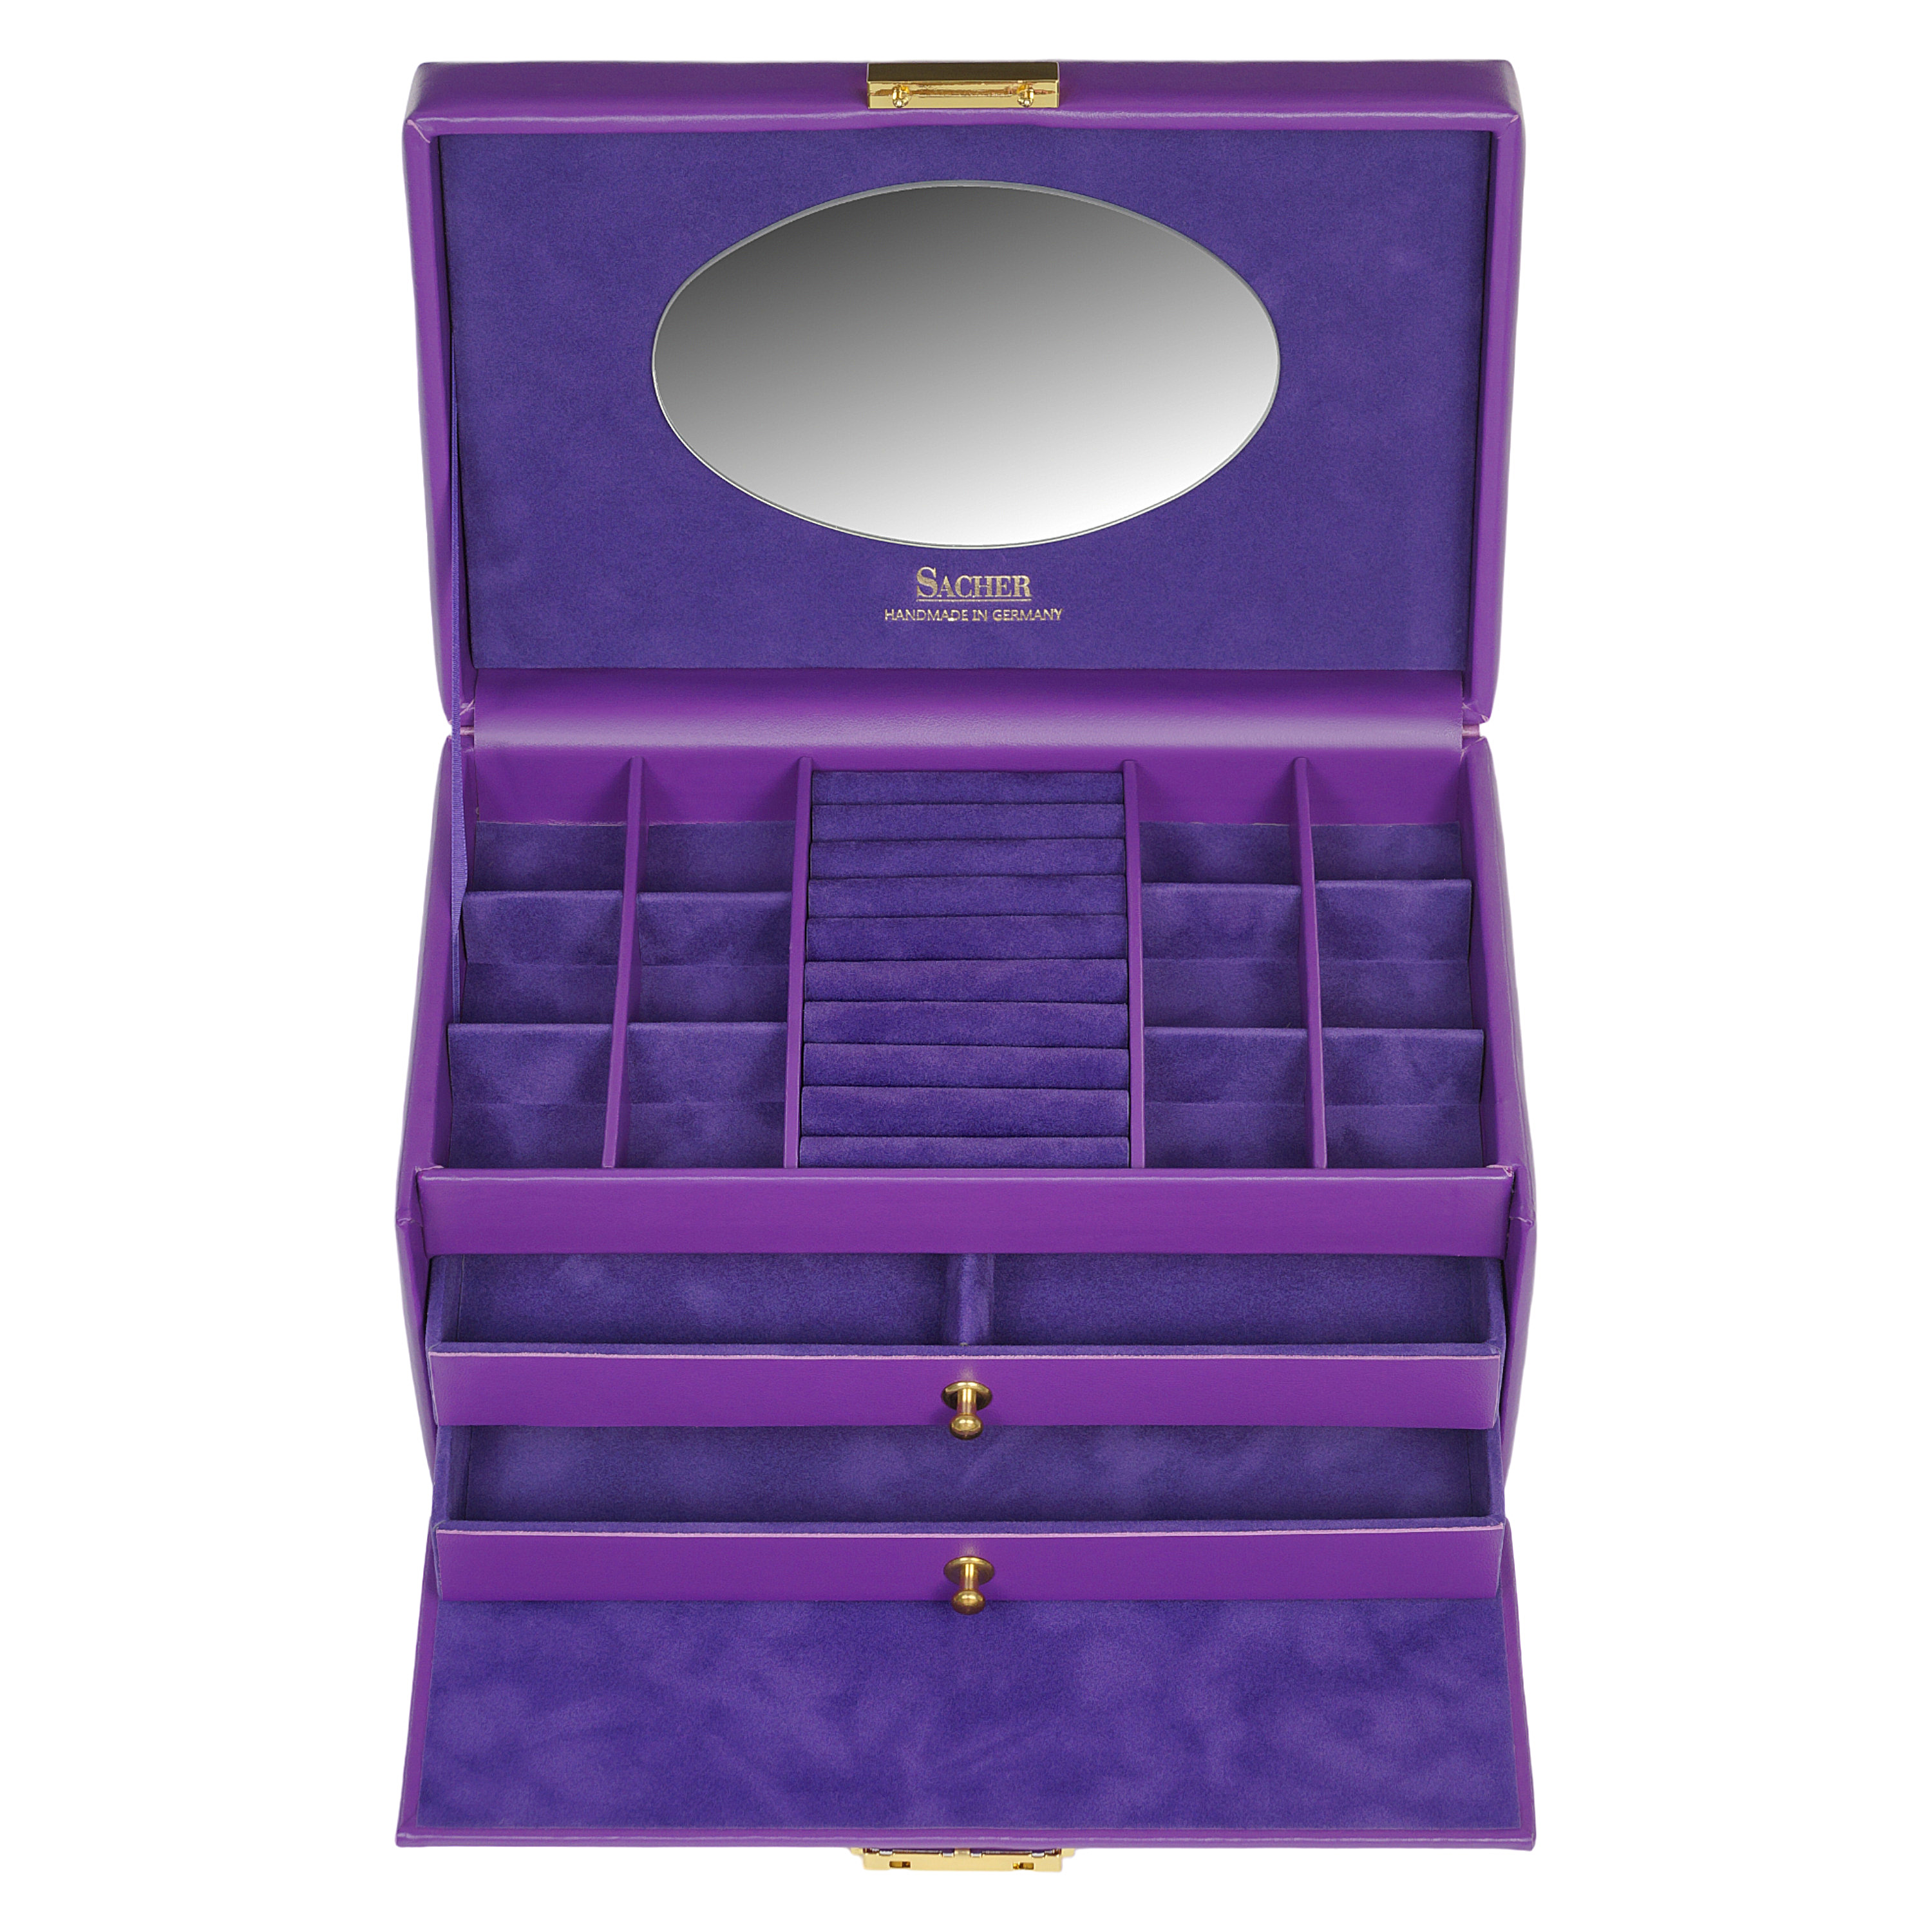 Emma colisimo jewellery box / violet (full cowhide) 